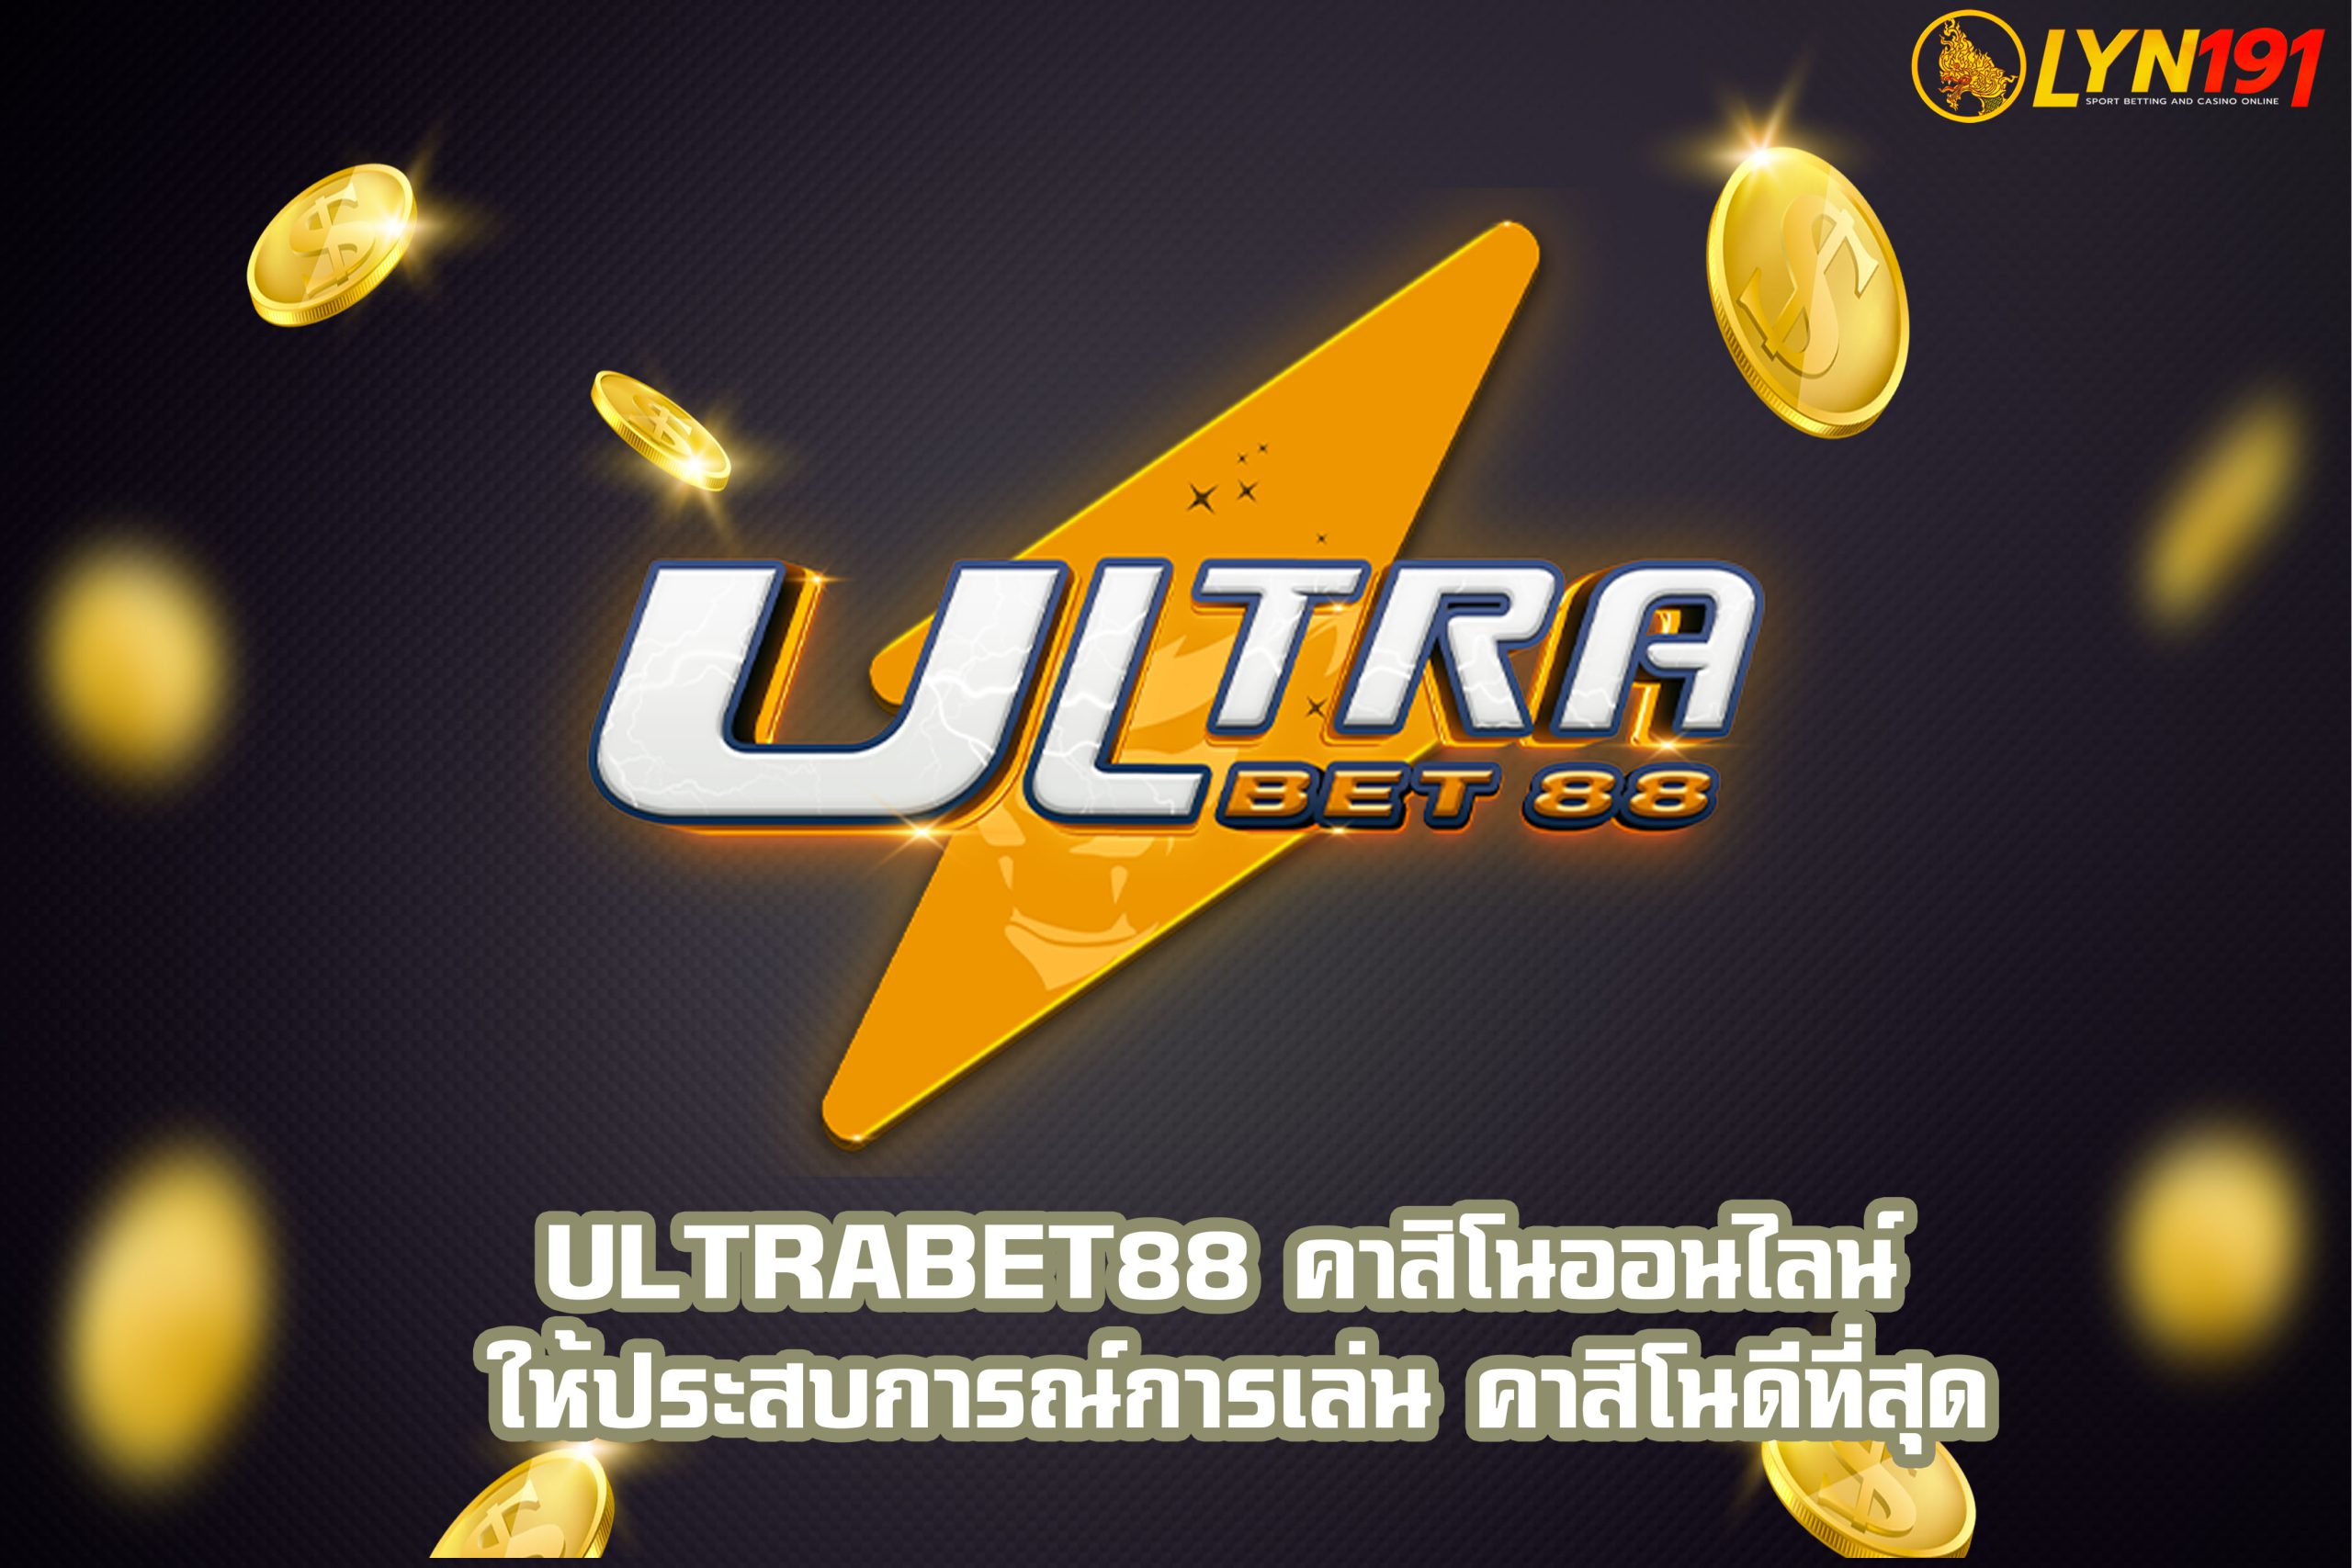 ULTRABET88